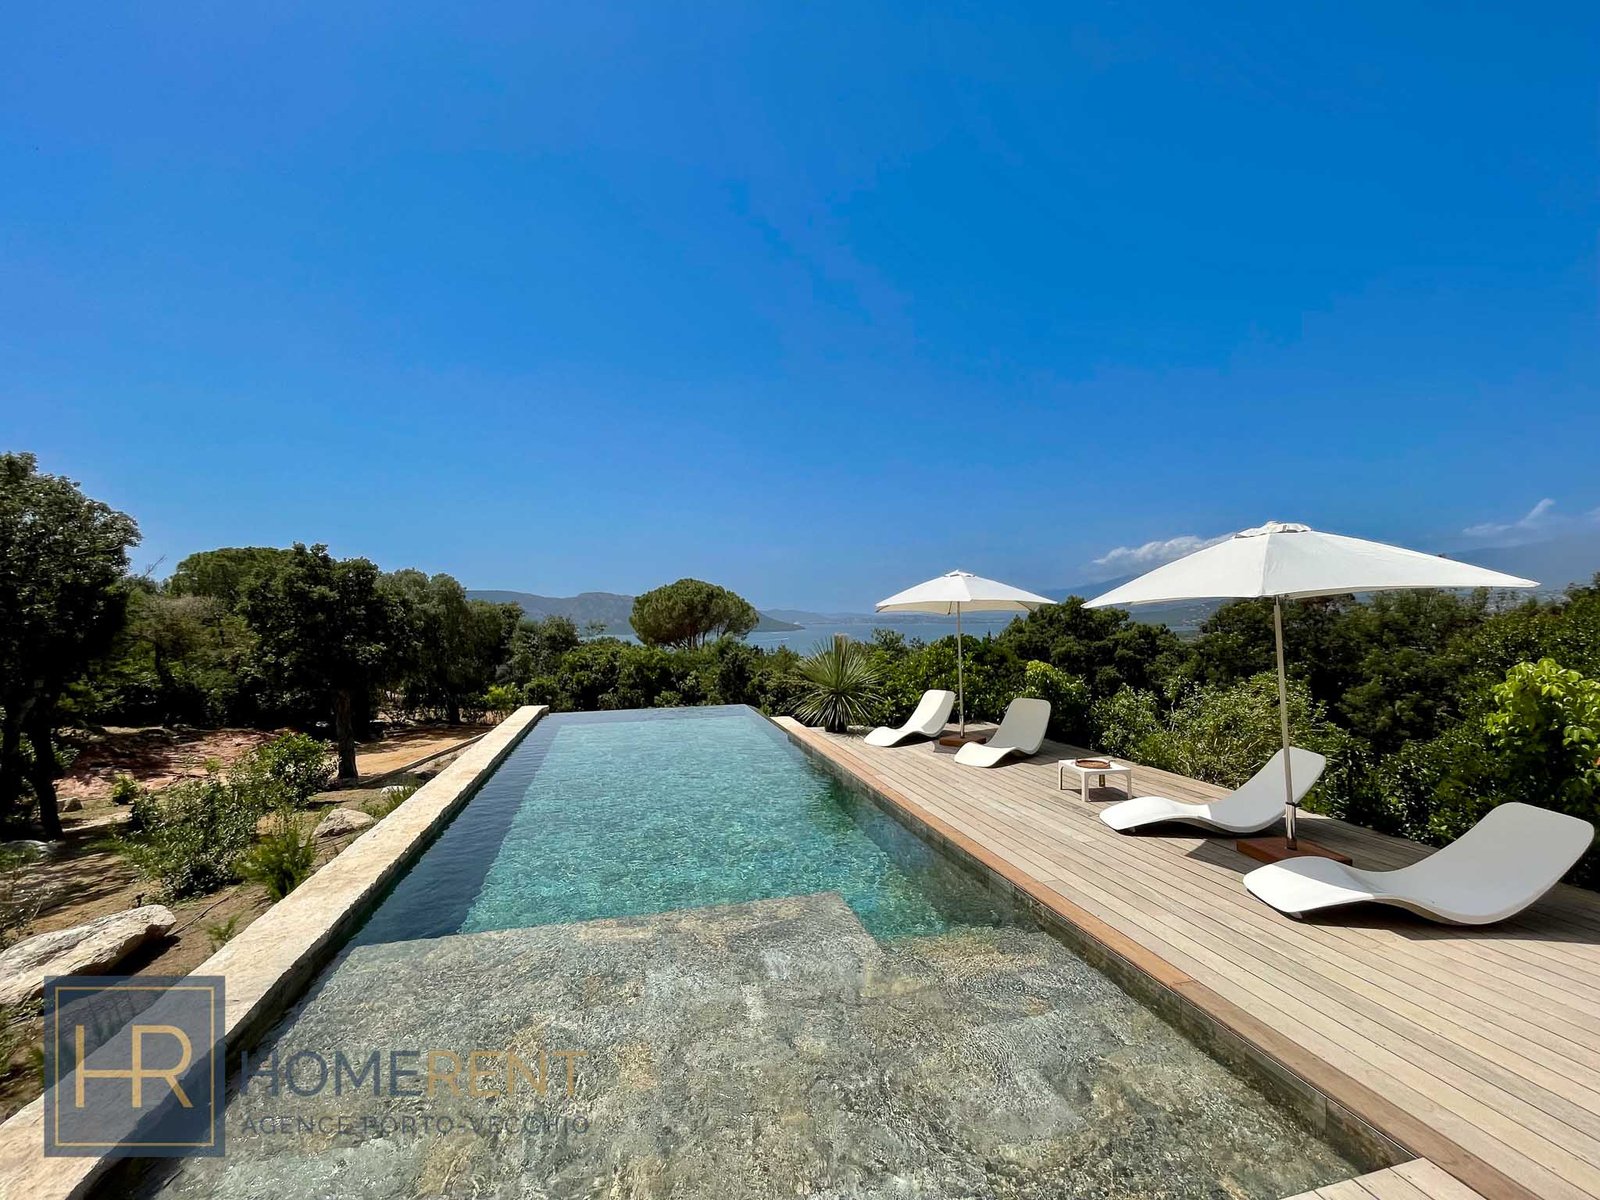 Location villa Porto Vecchio Corse du sud vue mer panoramique domaine privé de Cala Rossa 6 chambres piscine climatisation moderne luxe